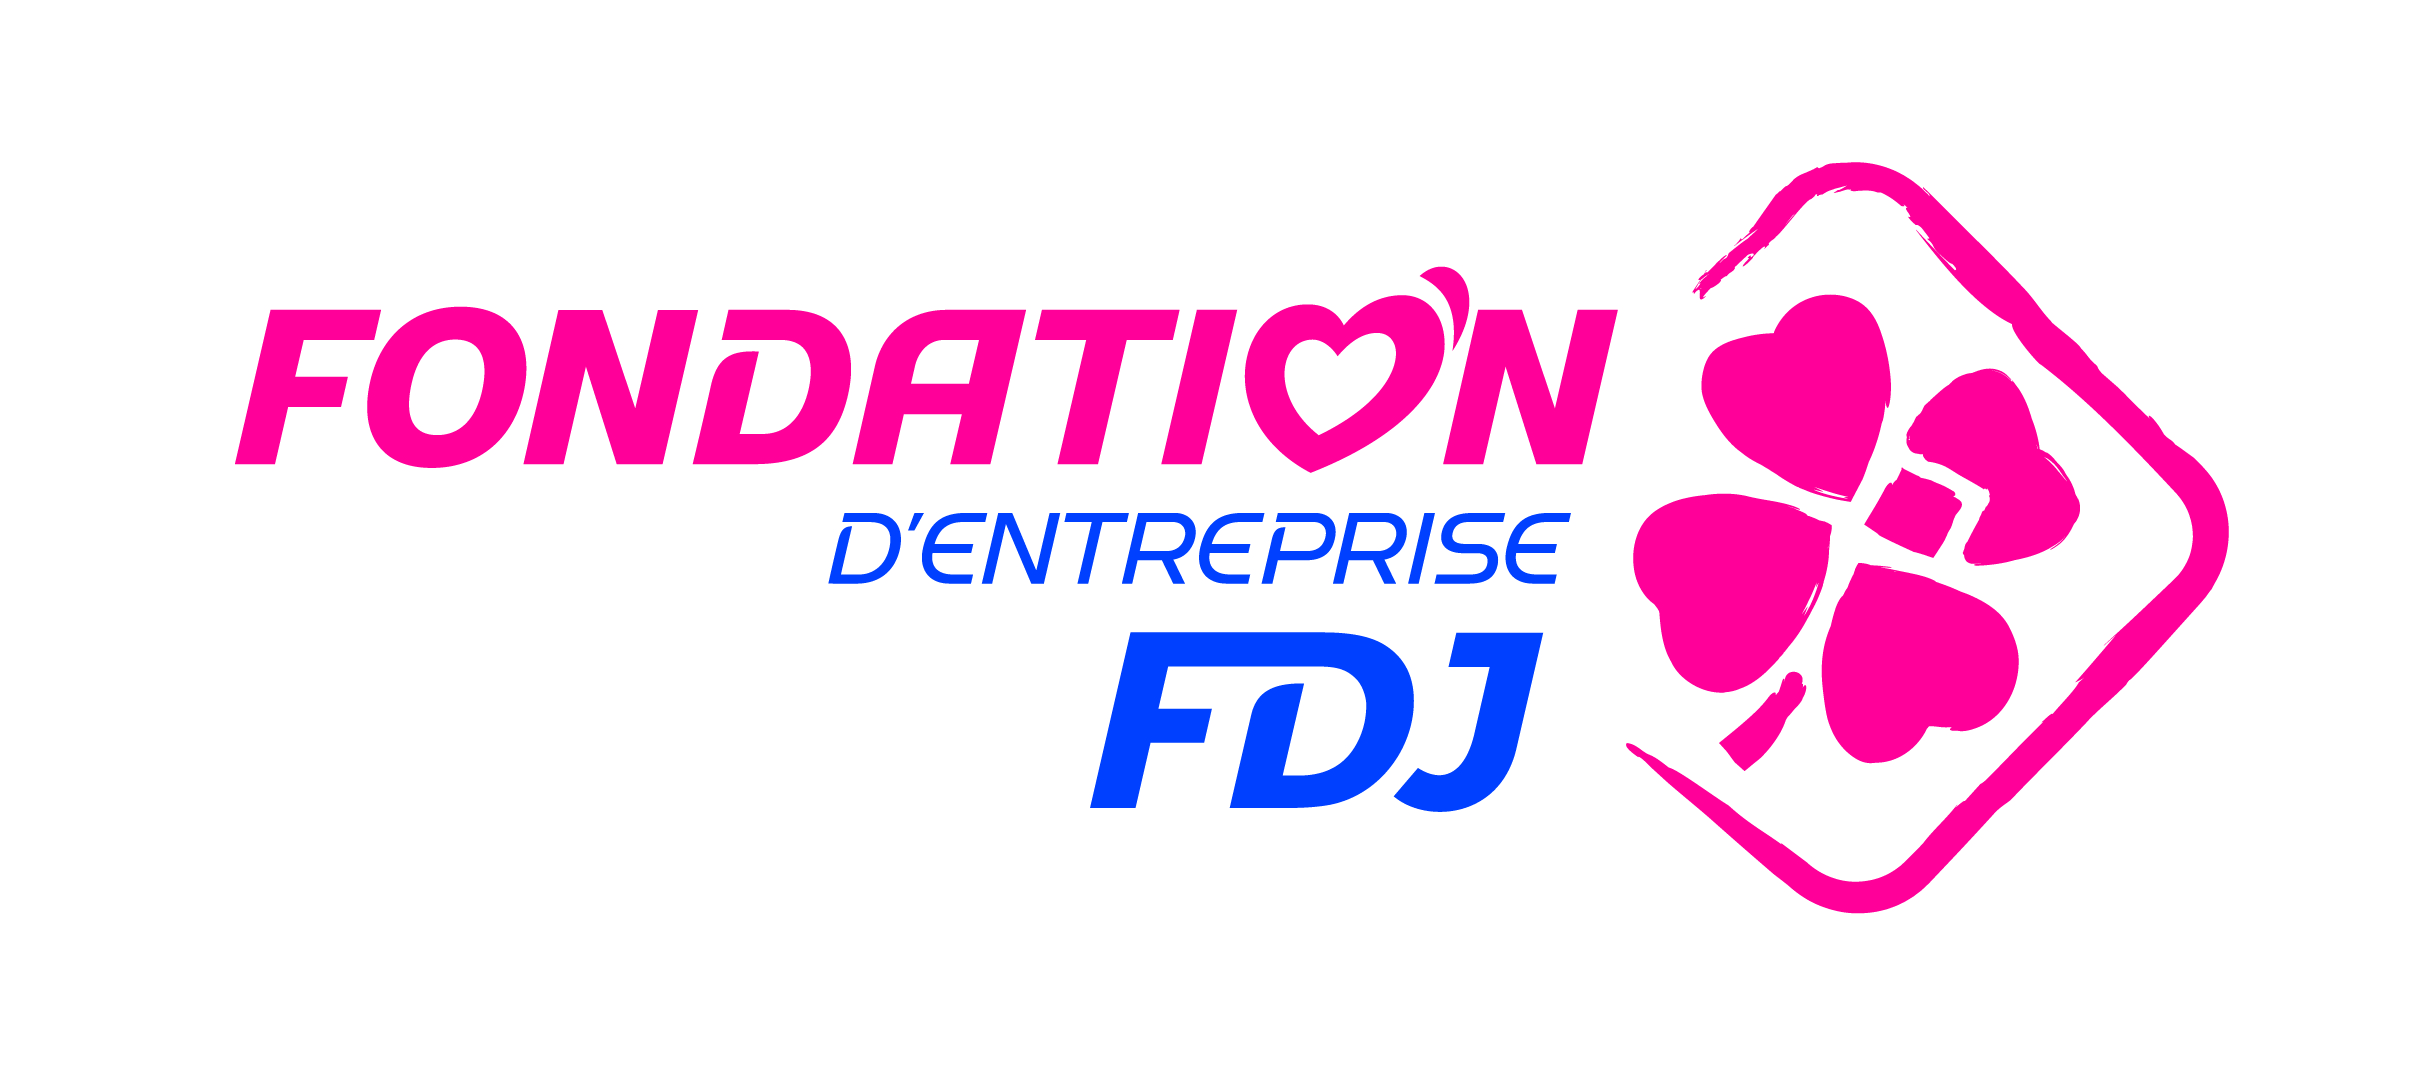 Fondation FDJ